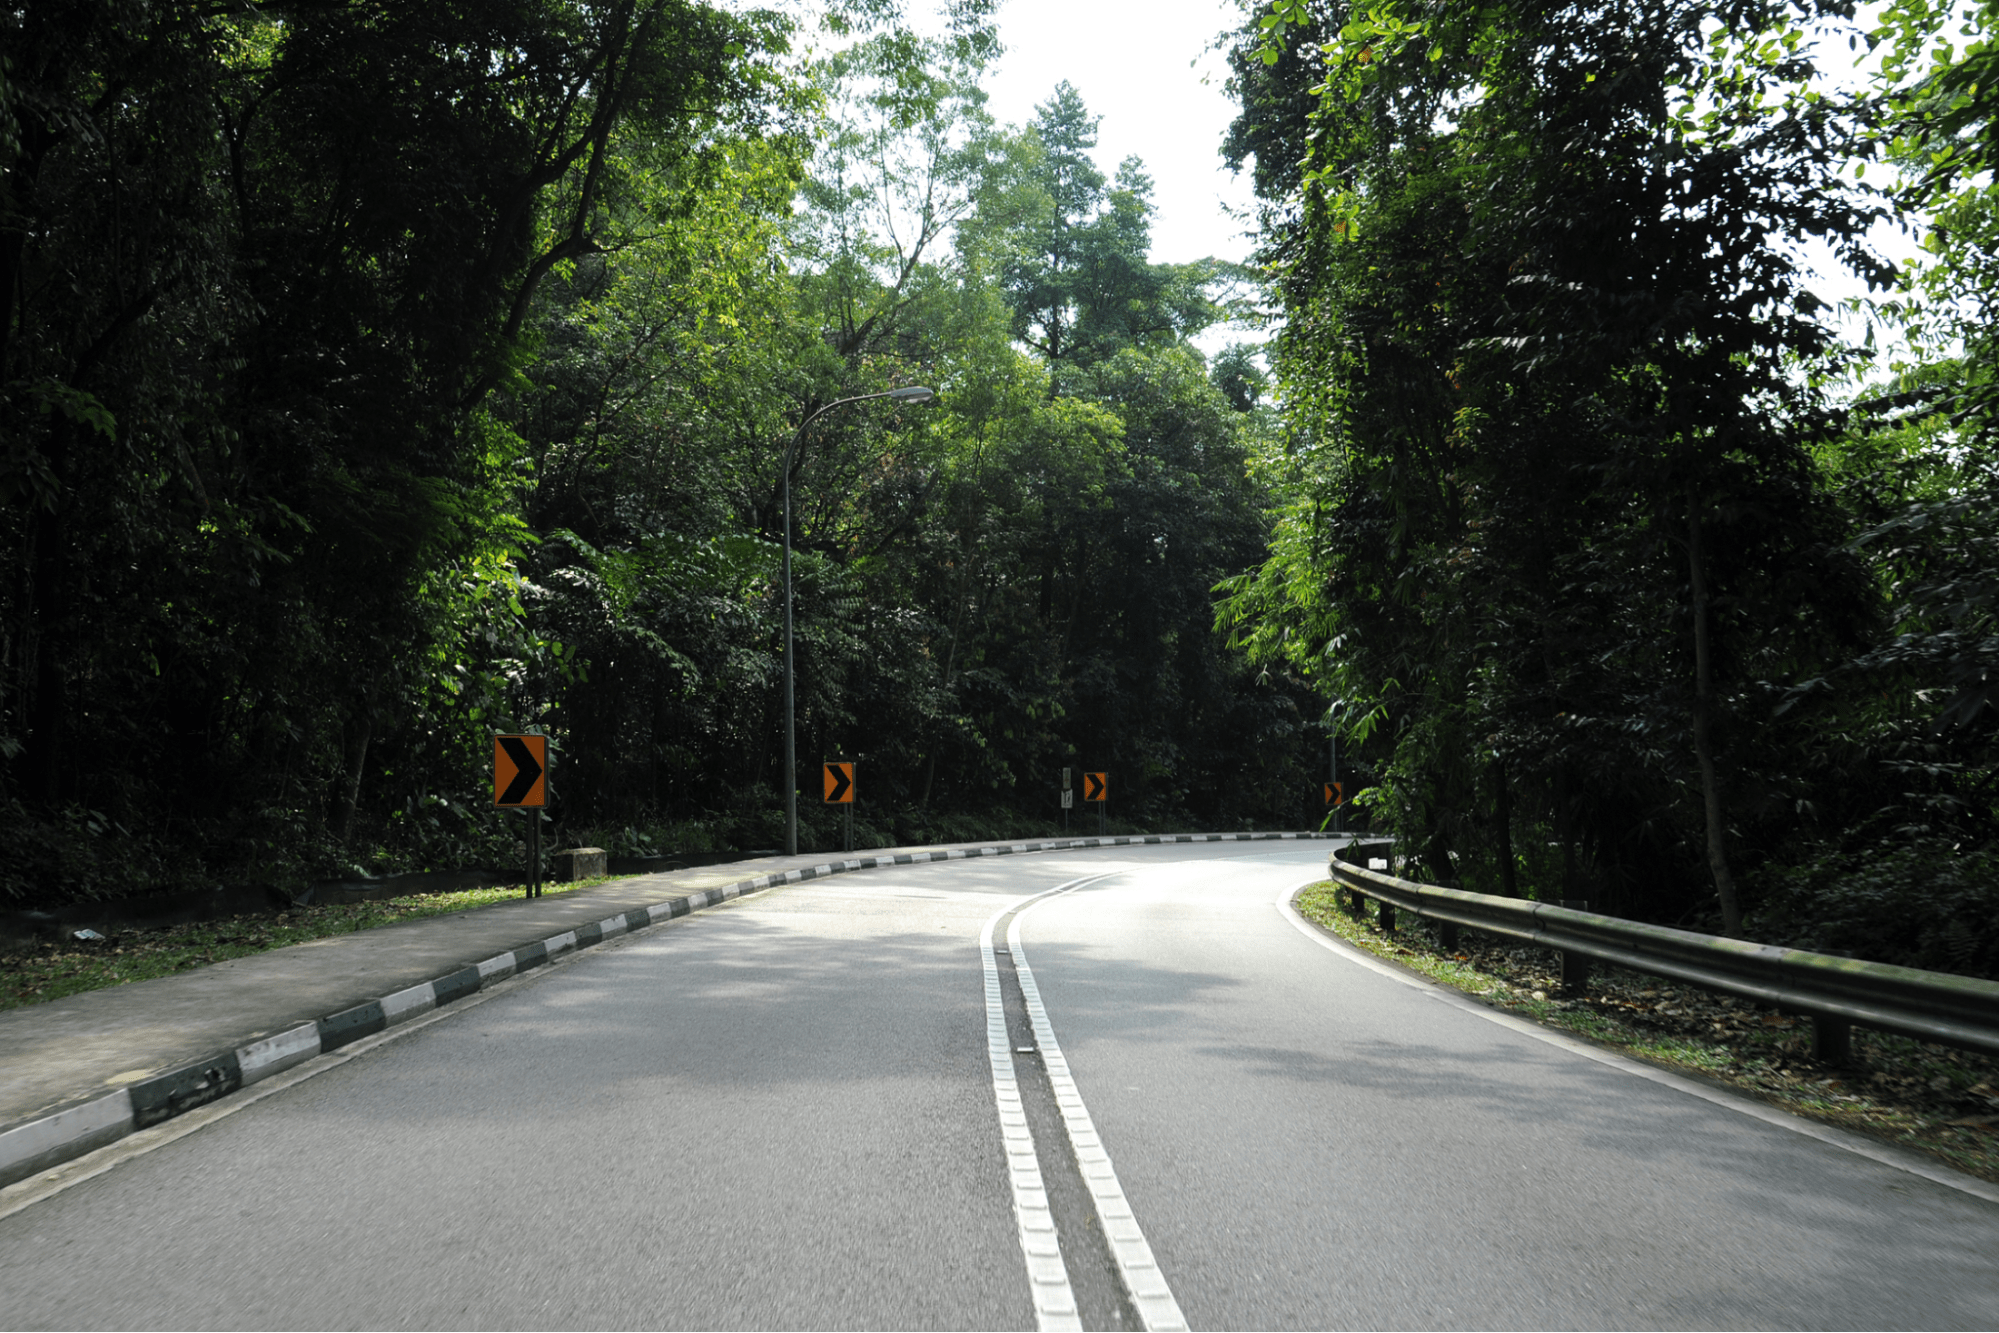 South Buona Vista Road